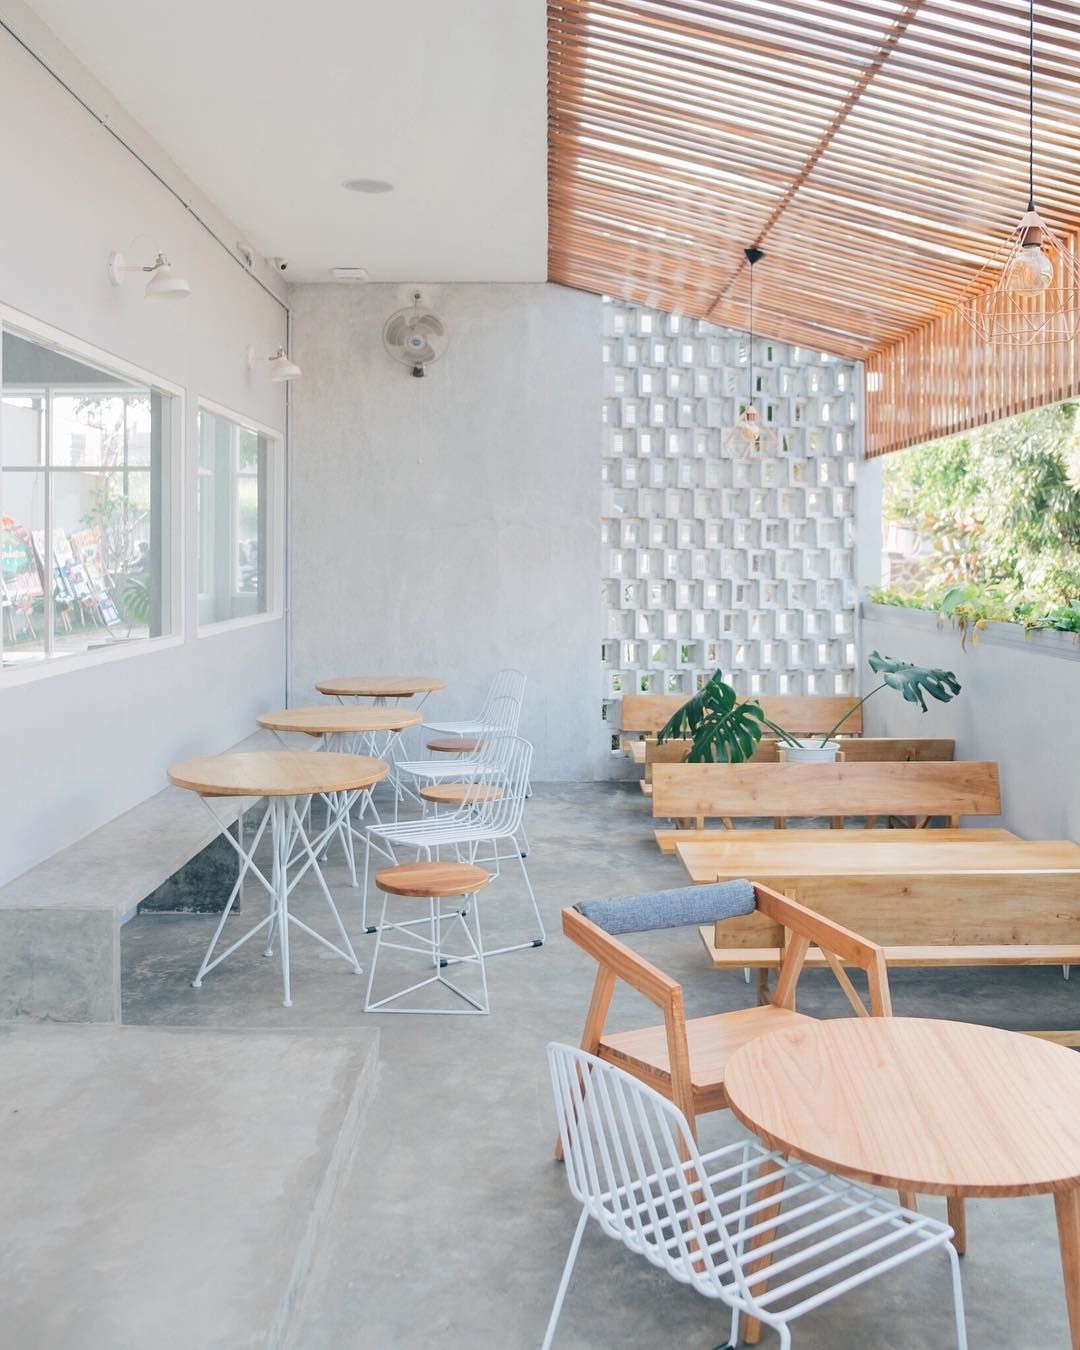 5 Cafe di Semarang yang Instagramable Banget, Wajib Didatangi Deh!